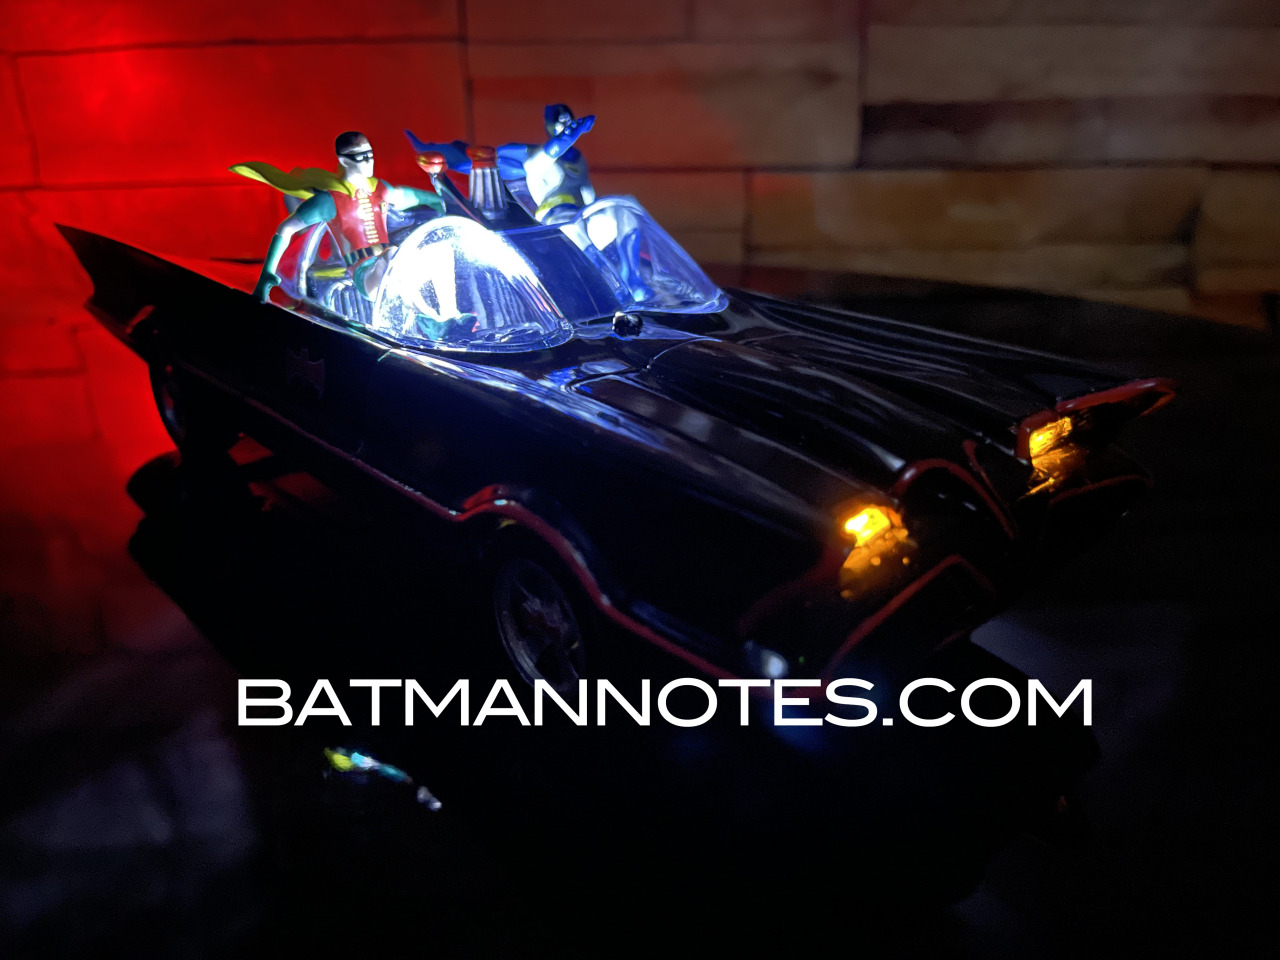 BATMAN TV Series BATMOBILE Sculpture With Music & Lights By Bradford Exchange